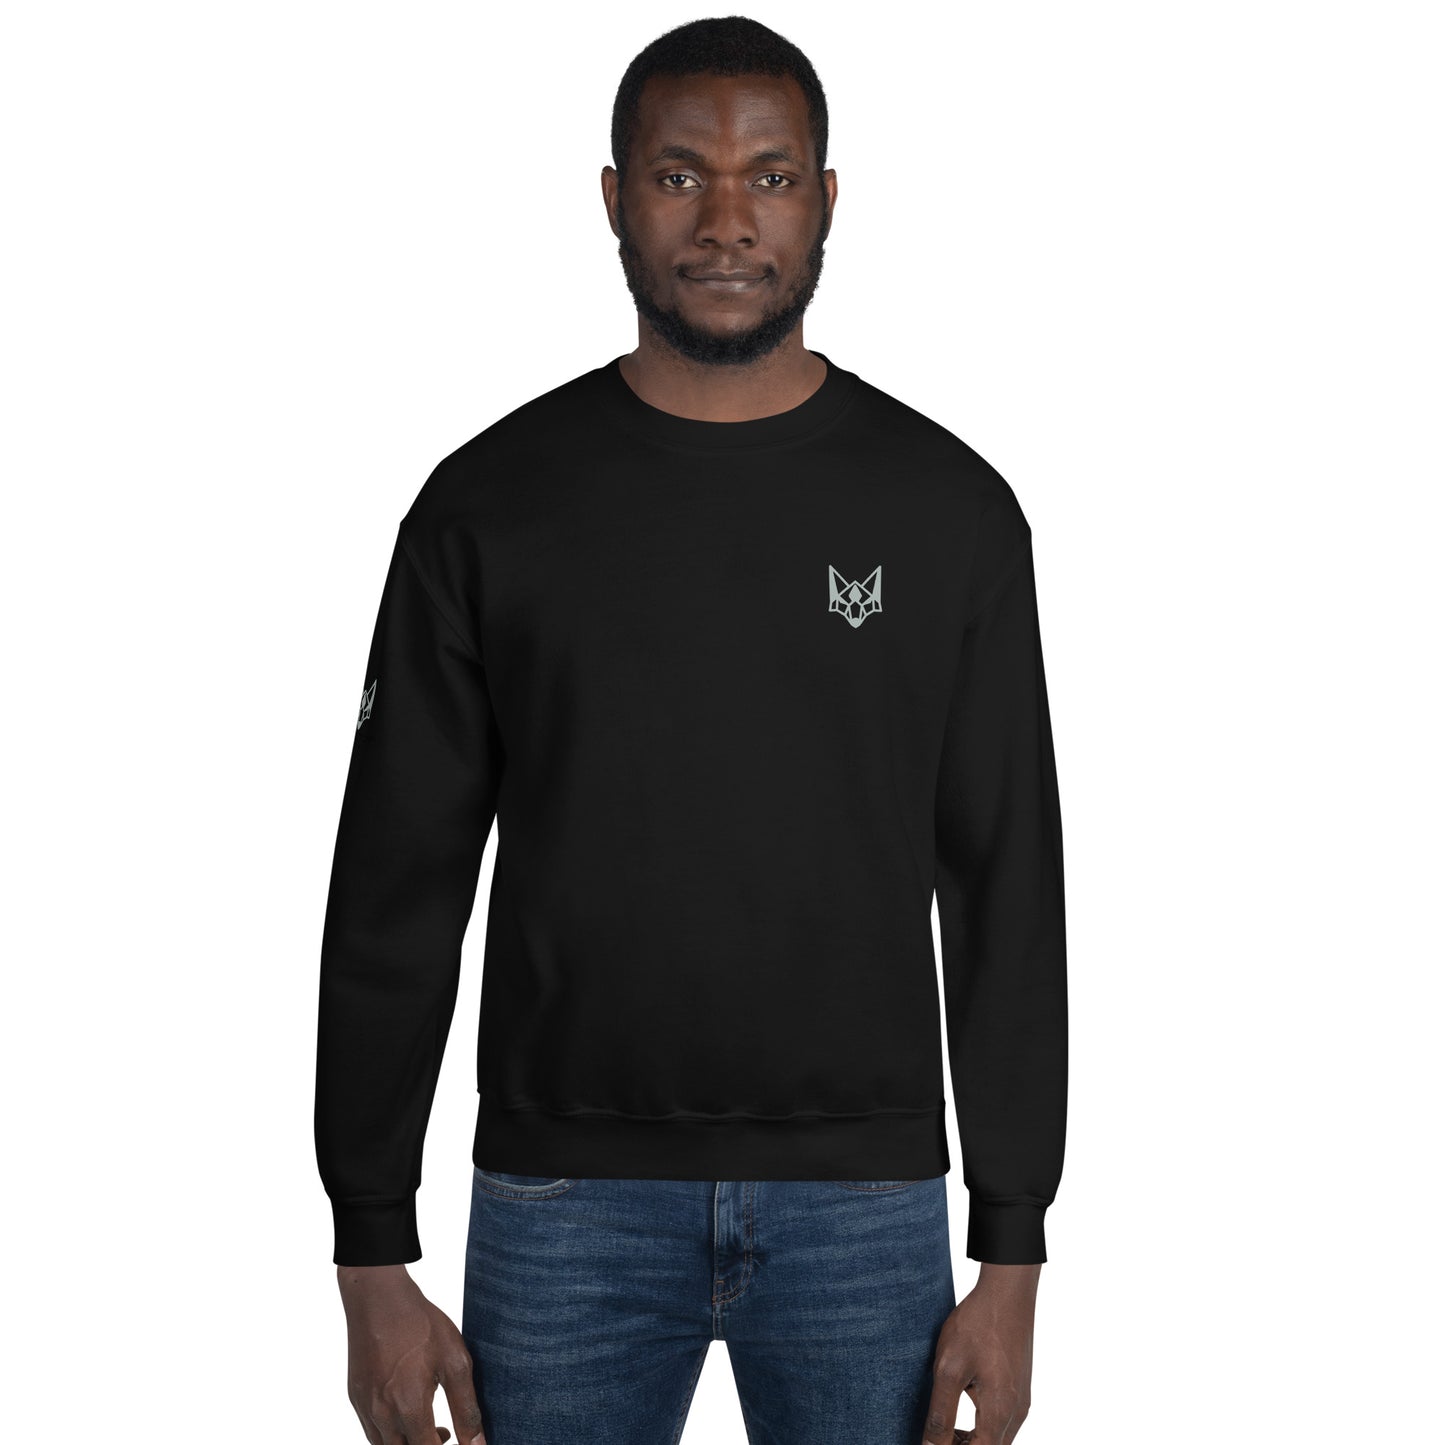 Unisex Sweatshirt by Hilltop Fox